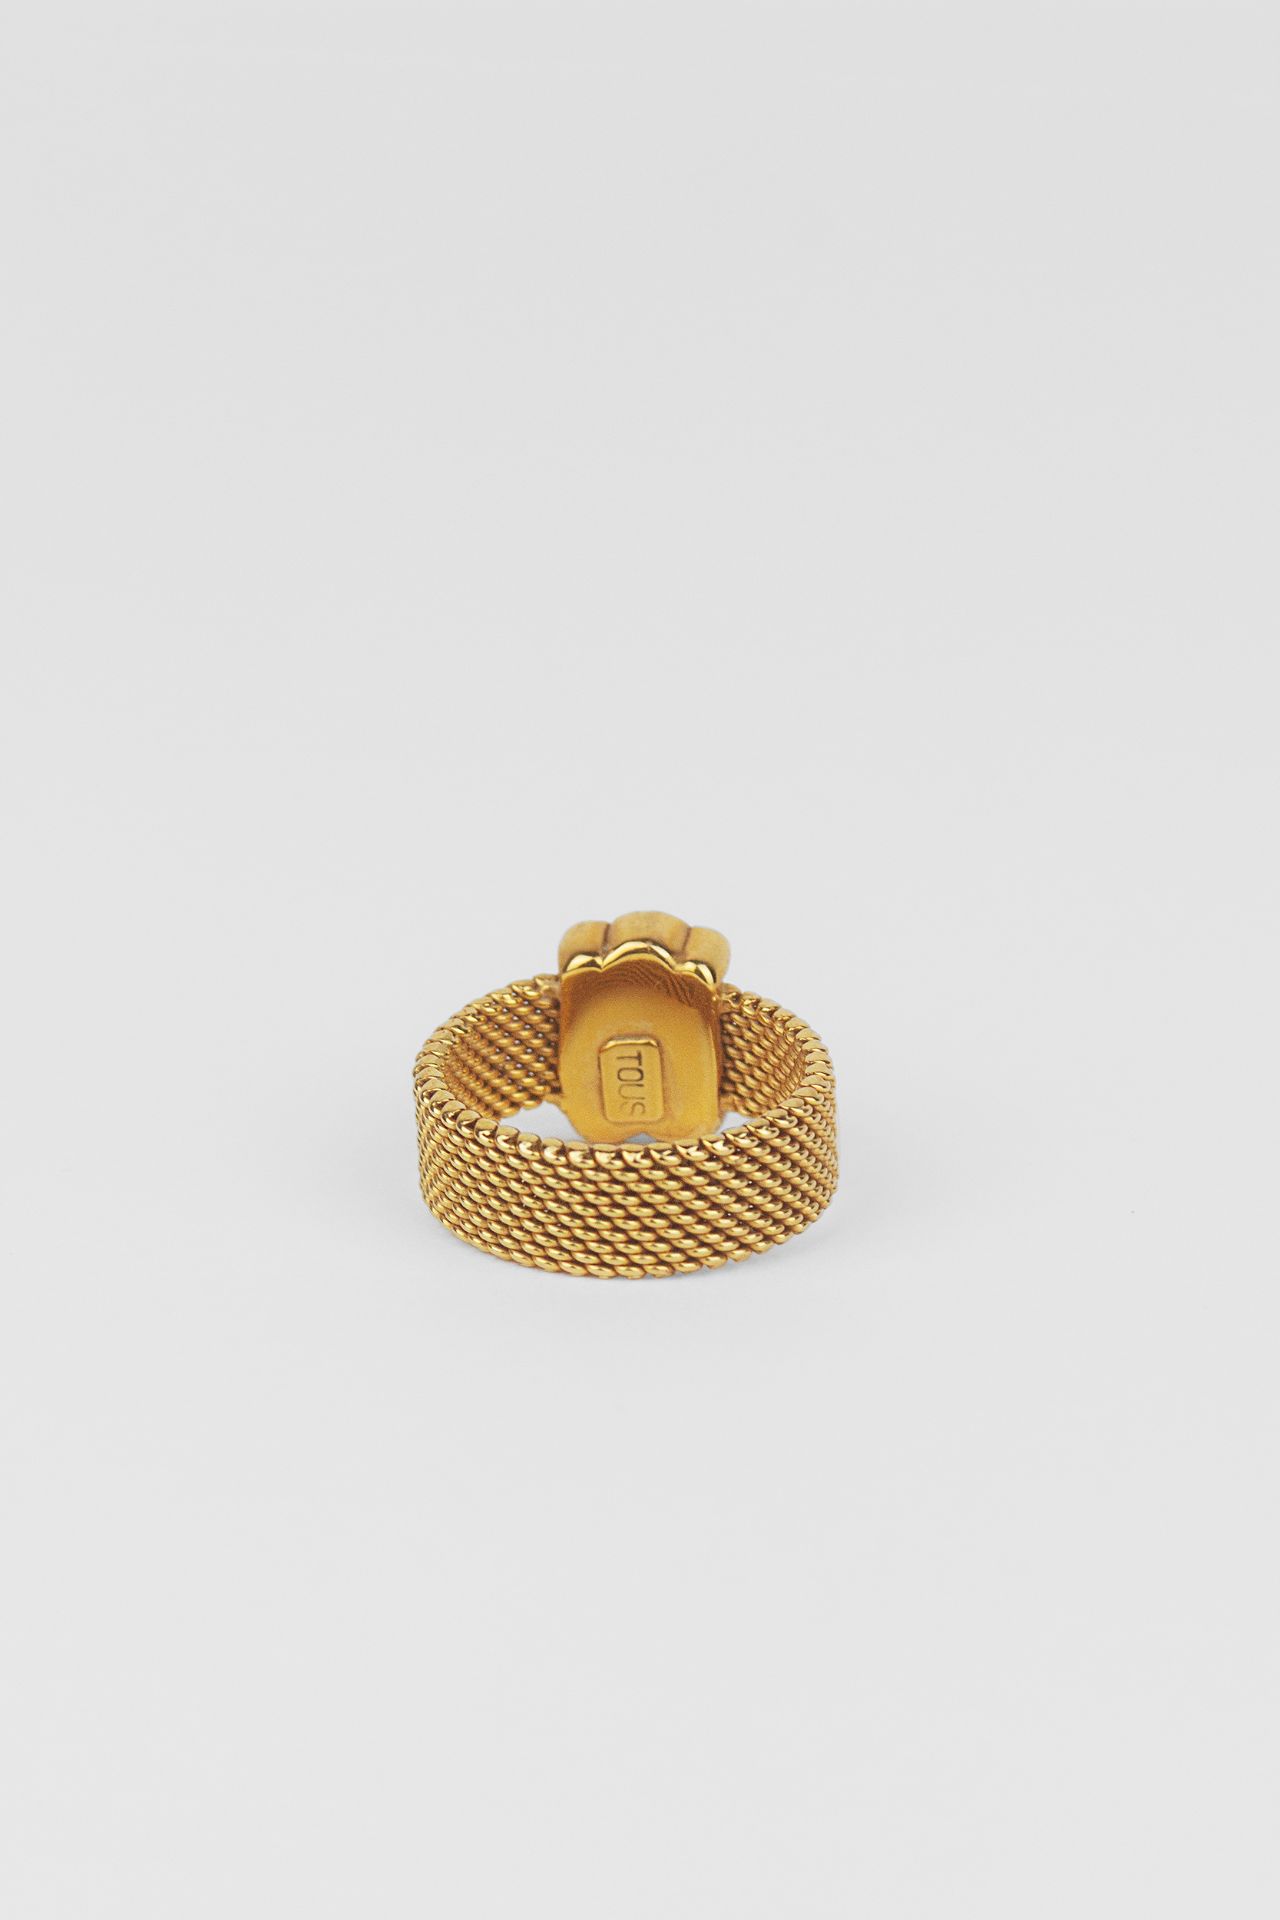 Tous. Mesh. An 18 k. yellow gold ring - Image 2 of 2